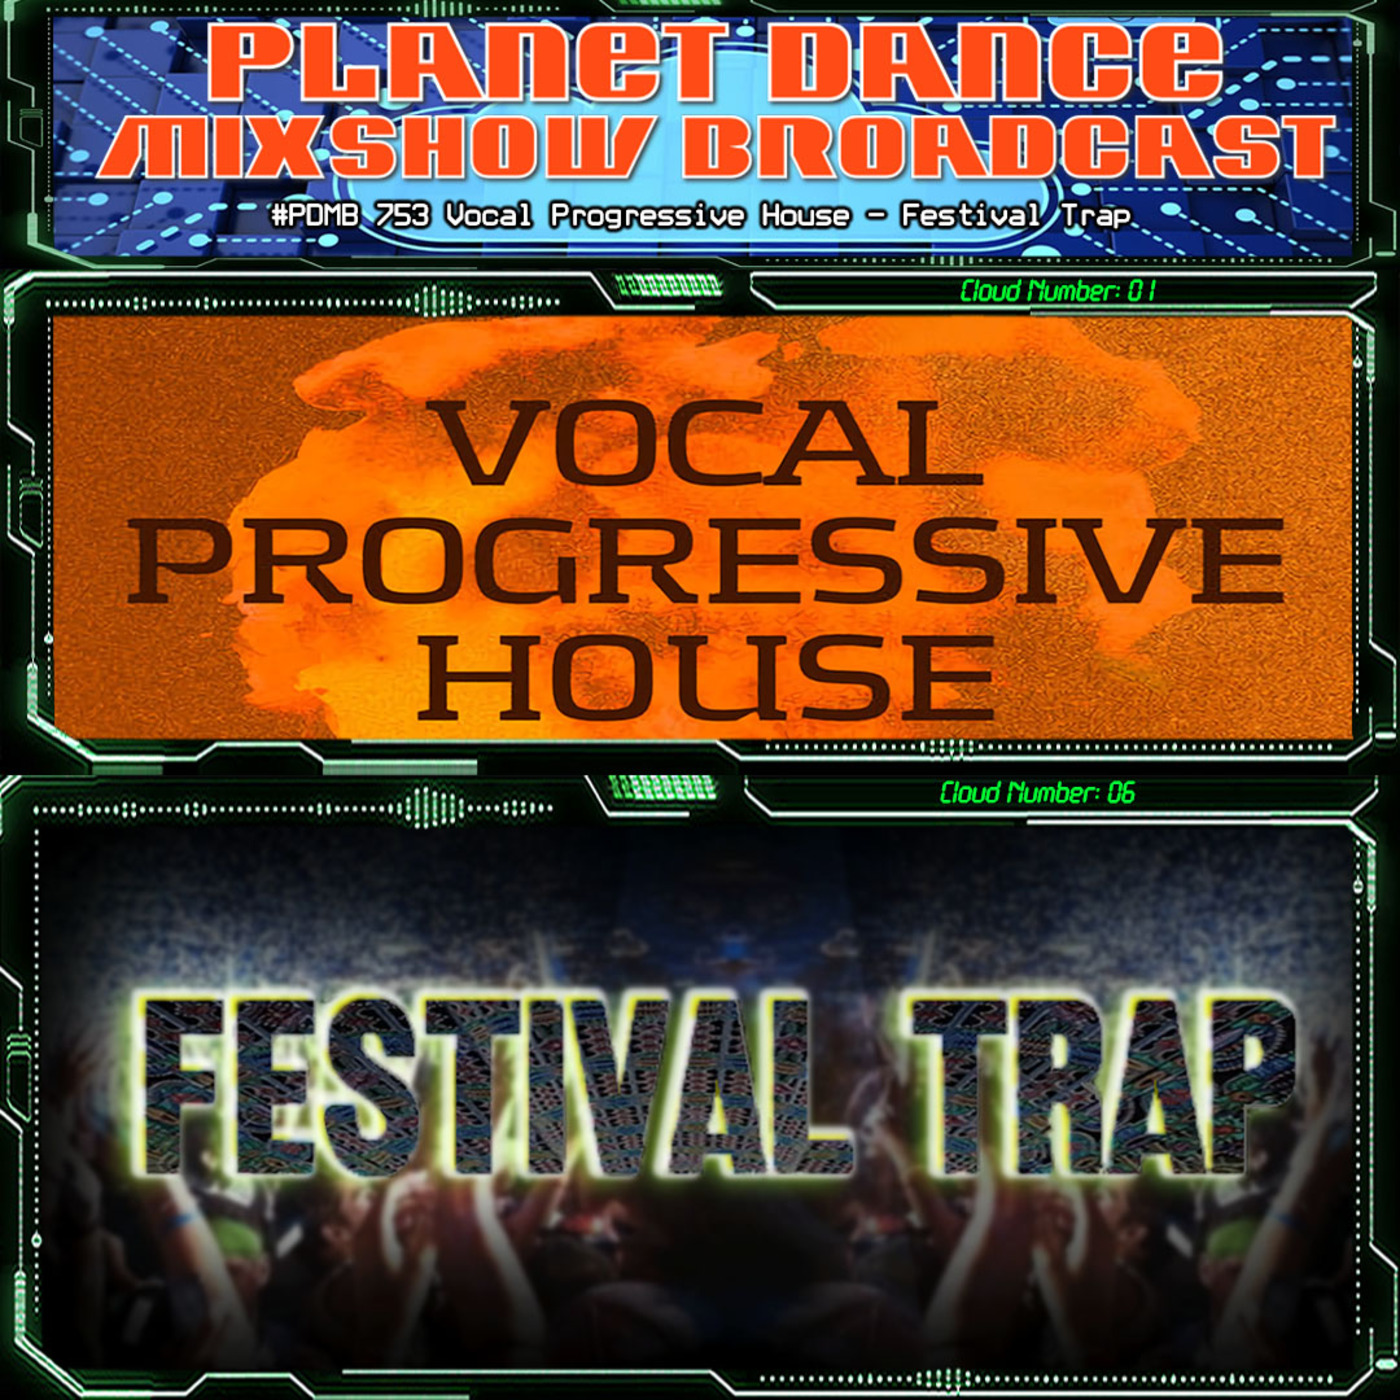 Planet Dance Mixshow Broadcast 753 Vocal Progressive House - Festival Trap